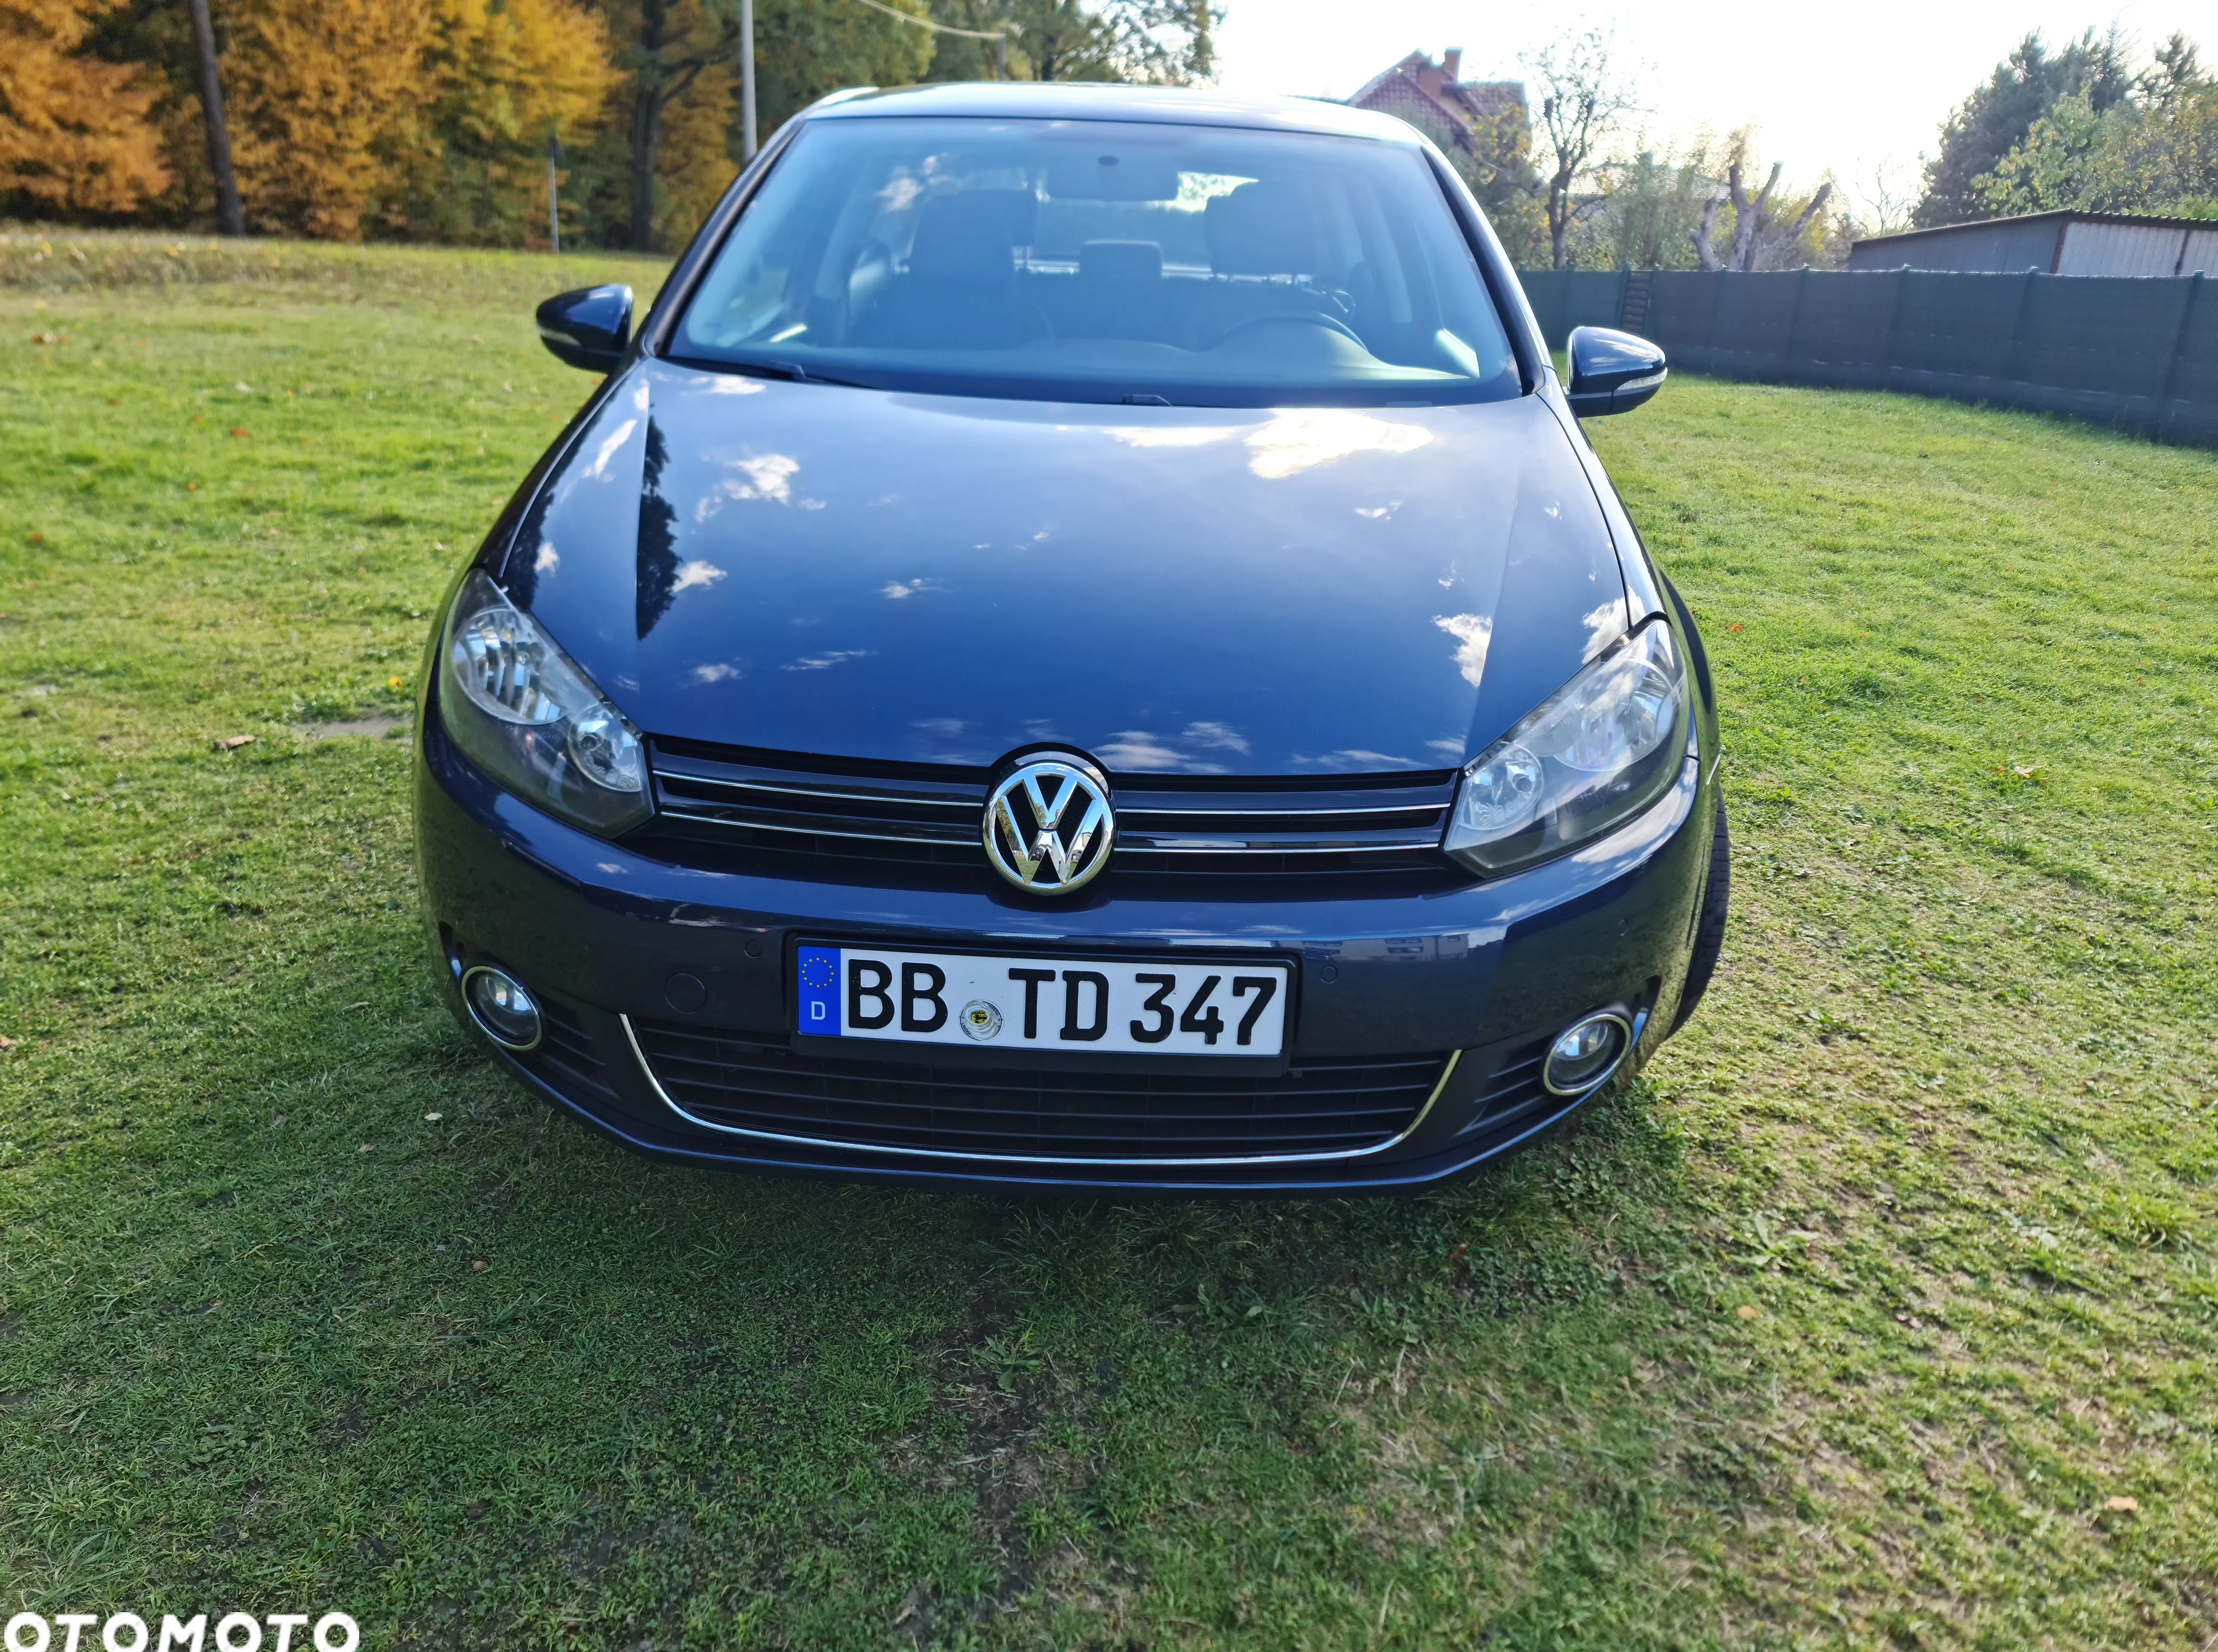 volkswagen Volkswagen Golf cena 19900 przebieg: 171856, rok produkcji 2009 z Rybnik